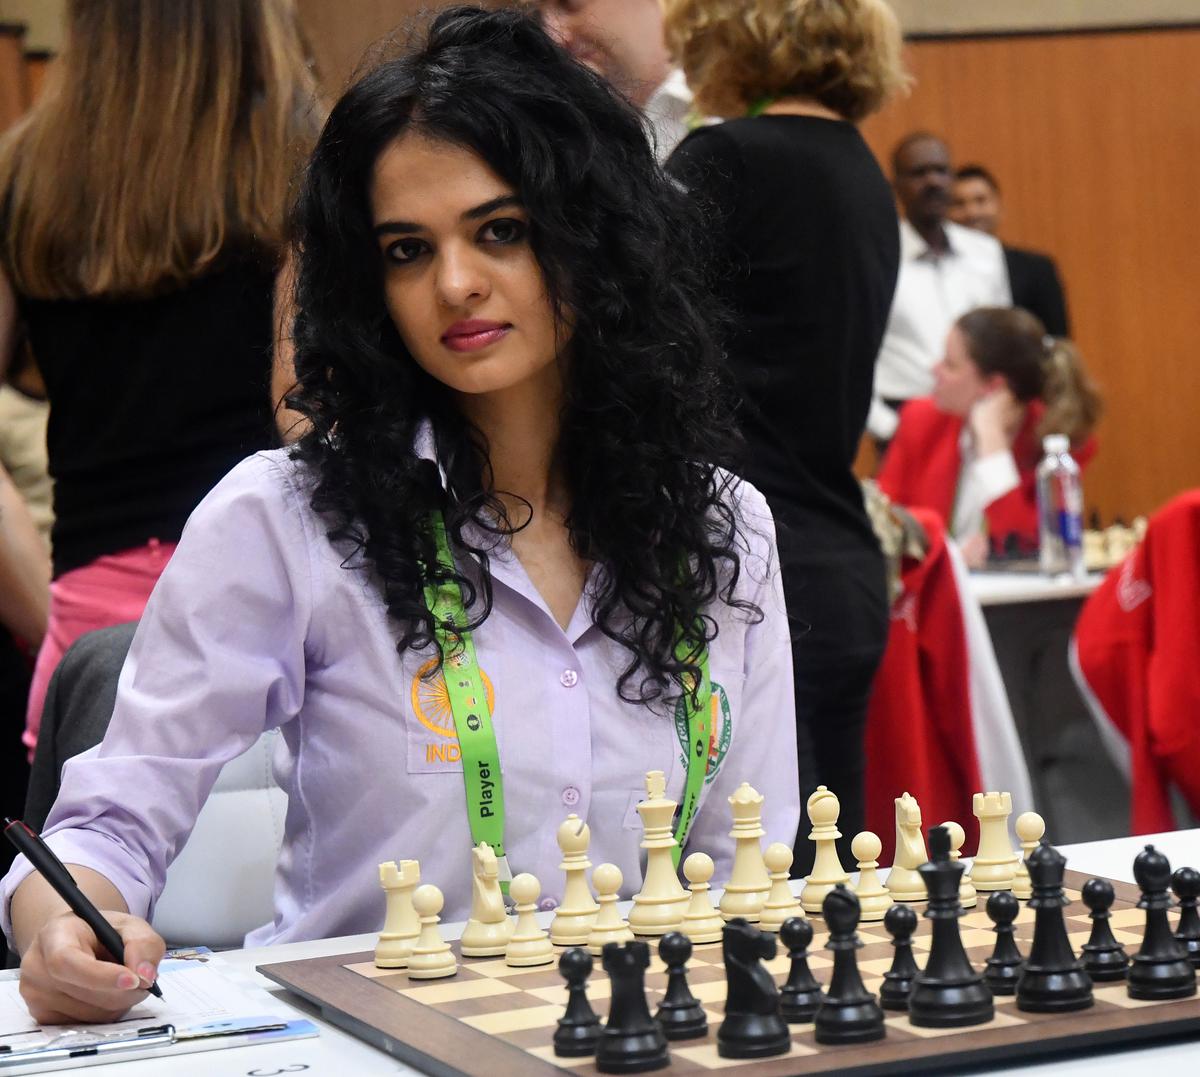 44th_chess_olympiad_tania_sachdev_03.jpg